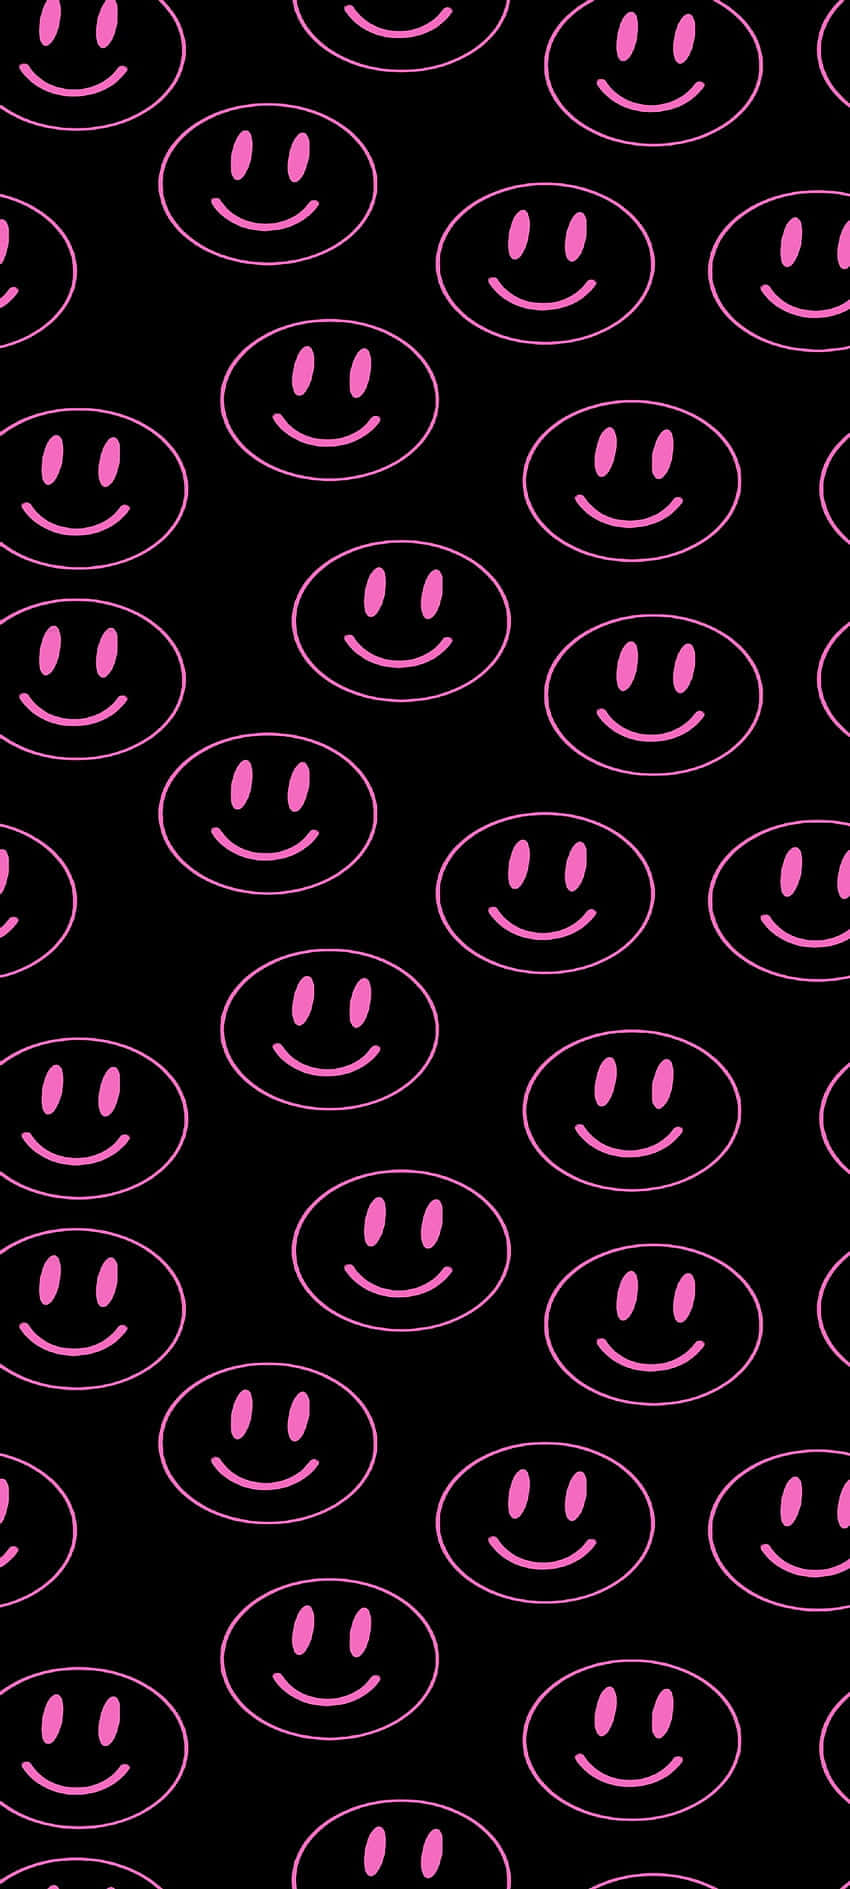 Pink Smiley Faces Pattern.jpg Wallpaper